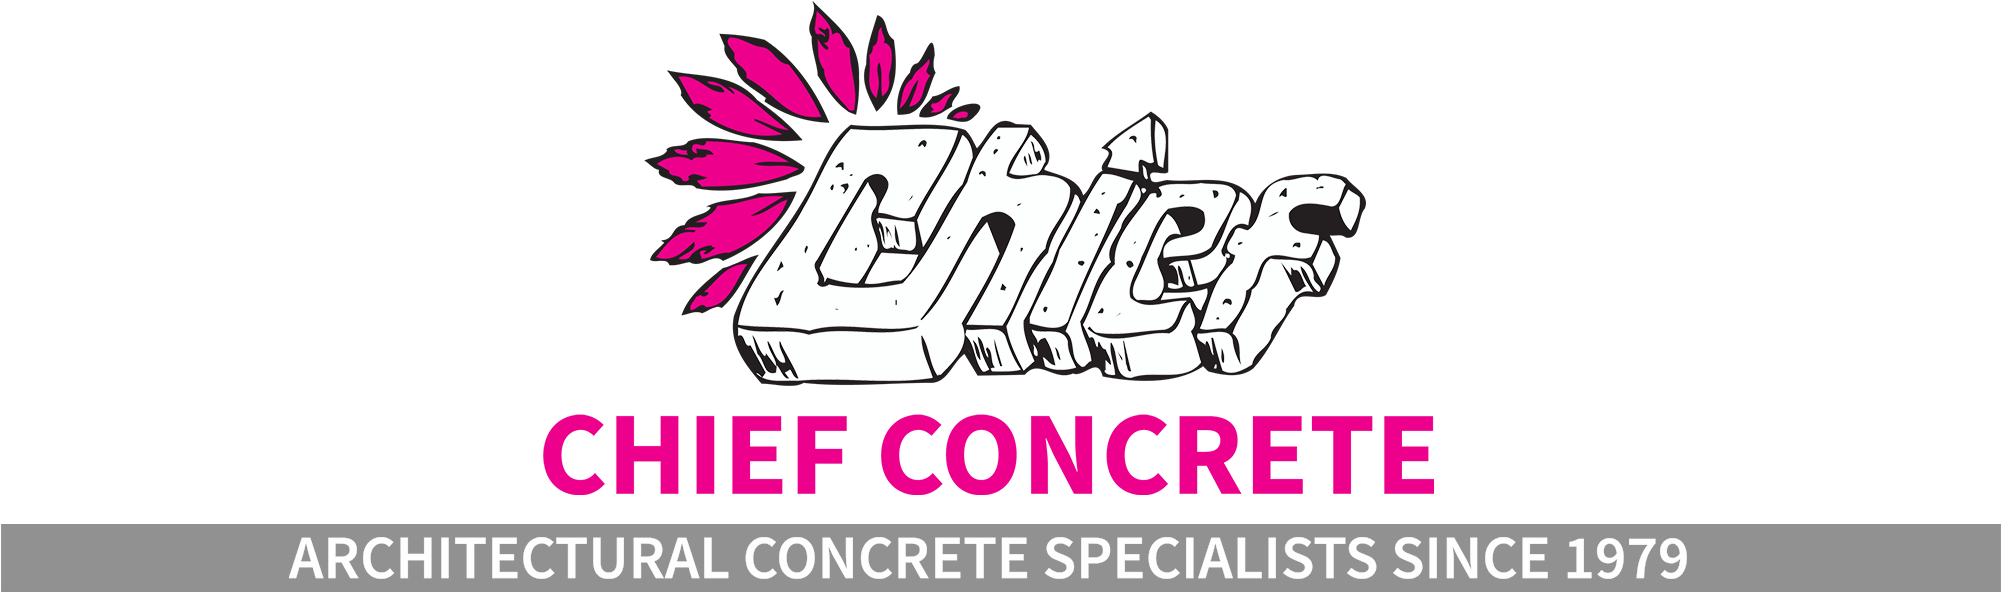 Chief Concrete Main Logo - Graphic Design (2000x1200), Png Download